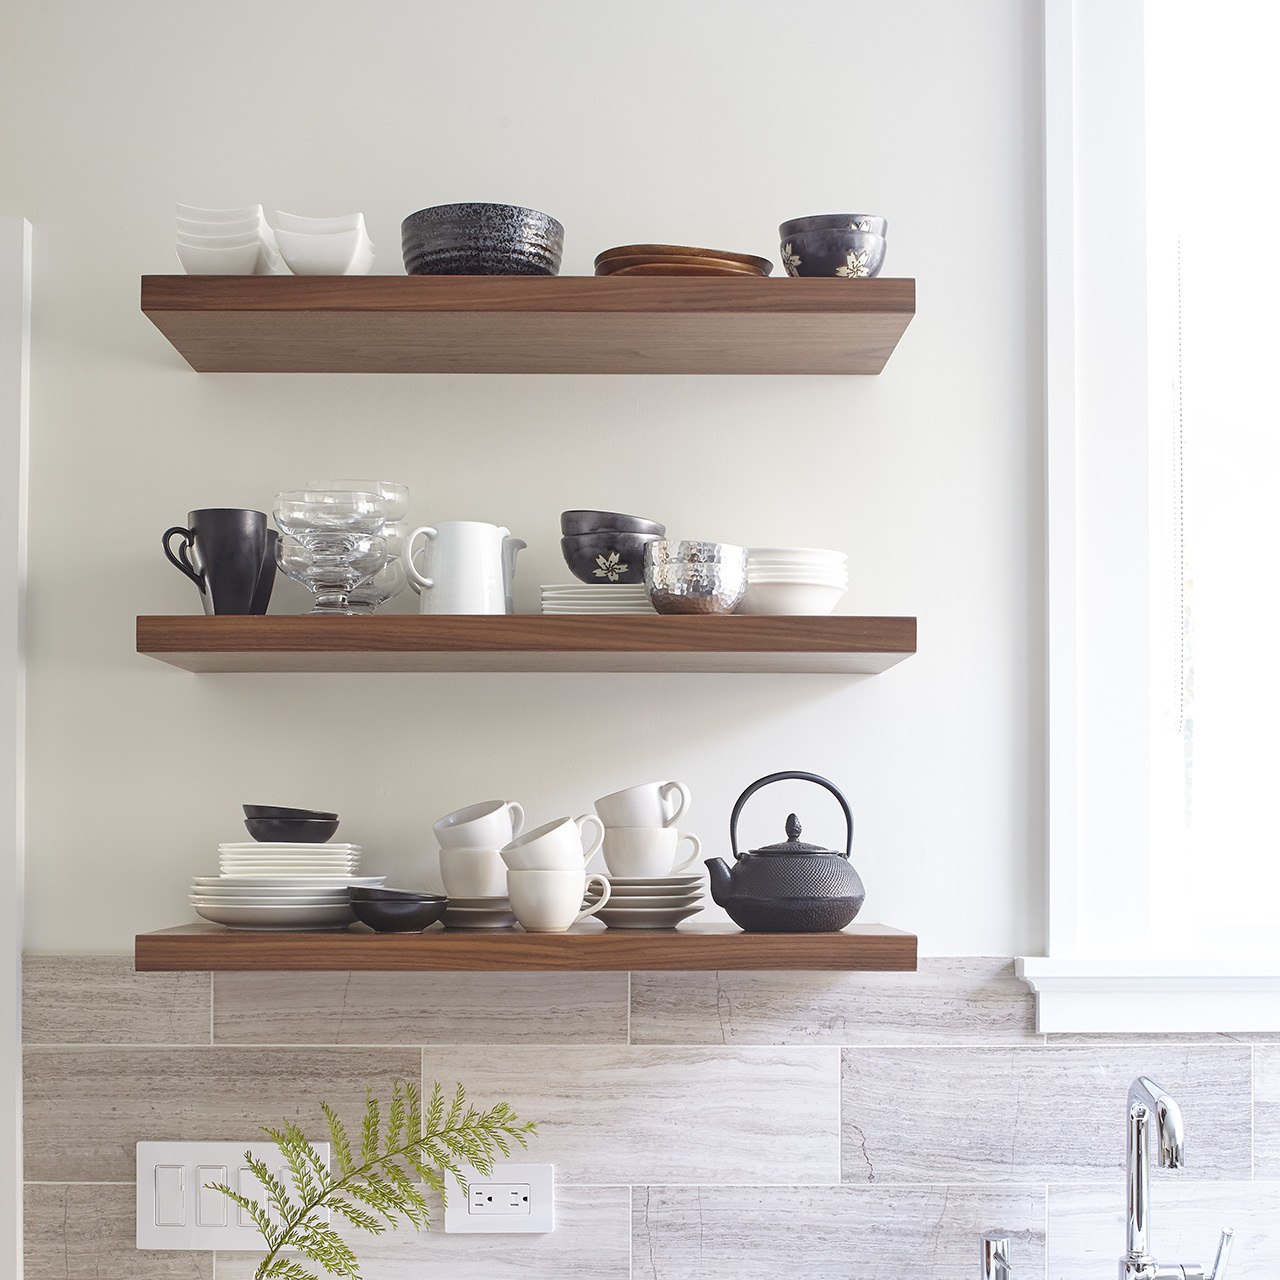 Designer Floating Shelves for the Kitchen